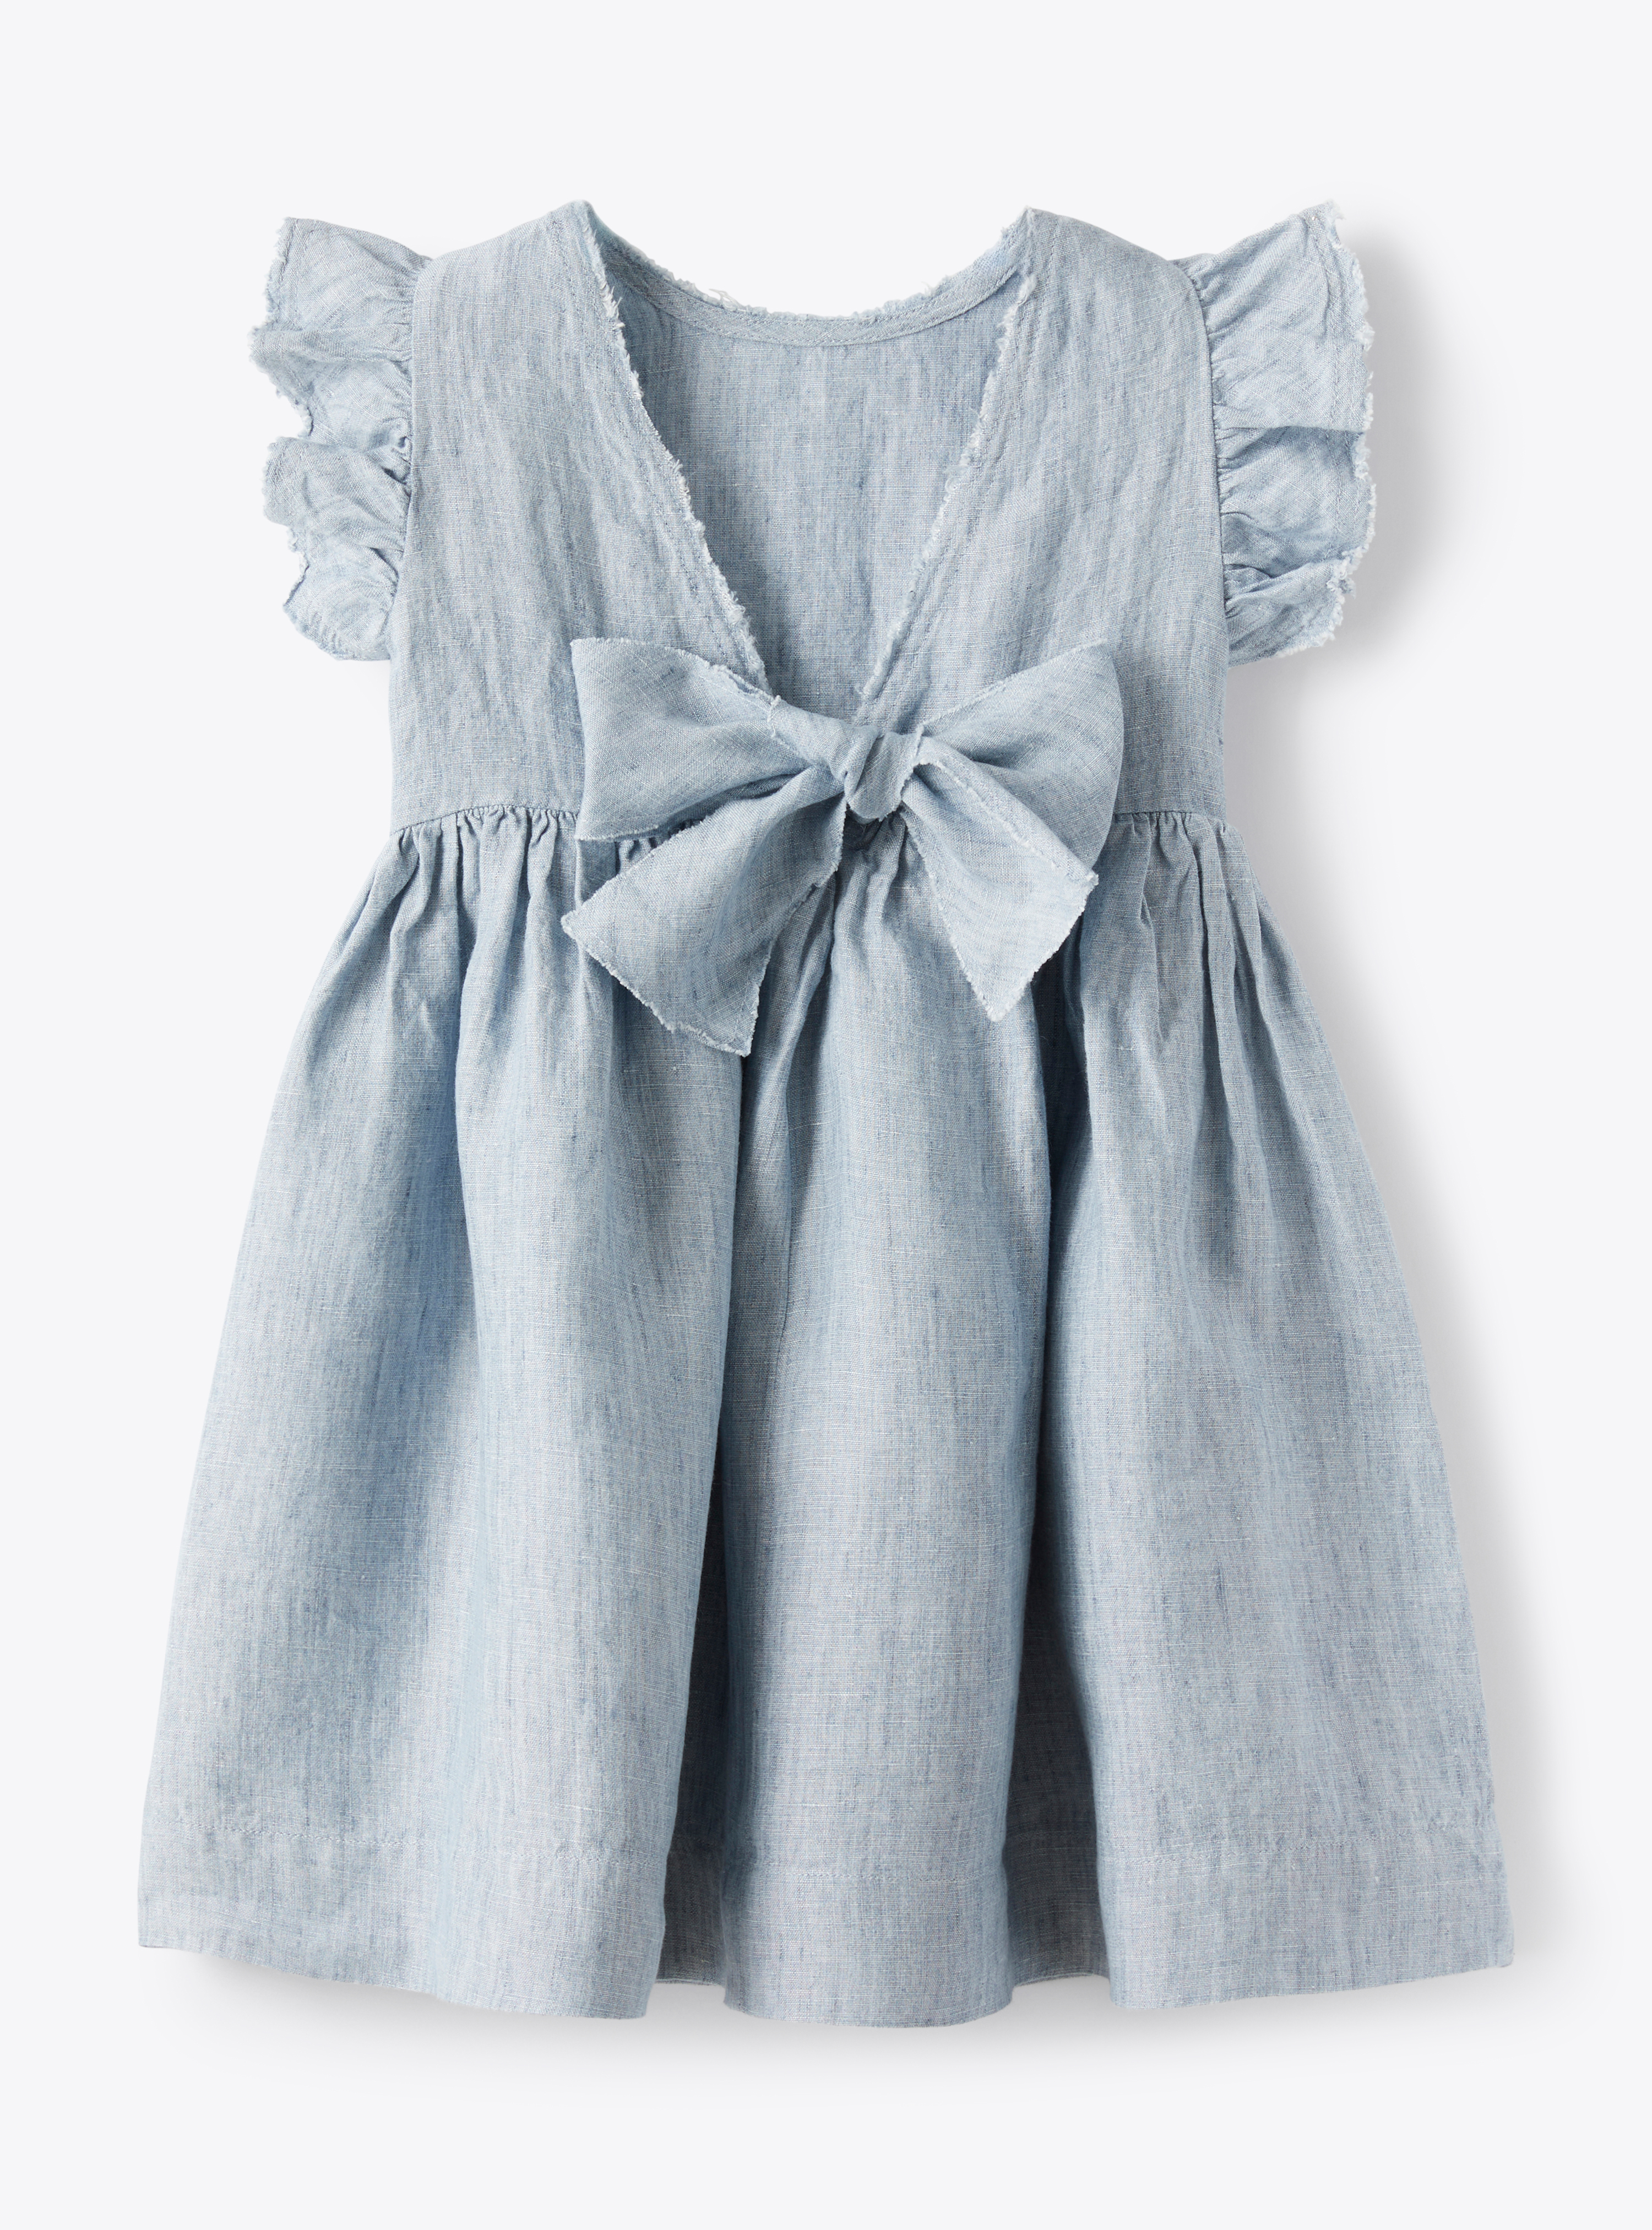 Linen dress with bow detail in mélange sky blue - Light blue | Il Gufo